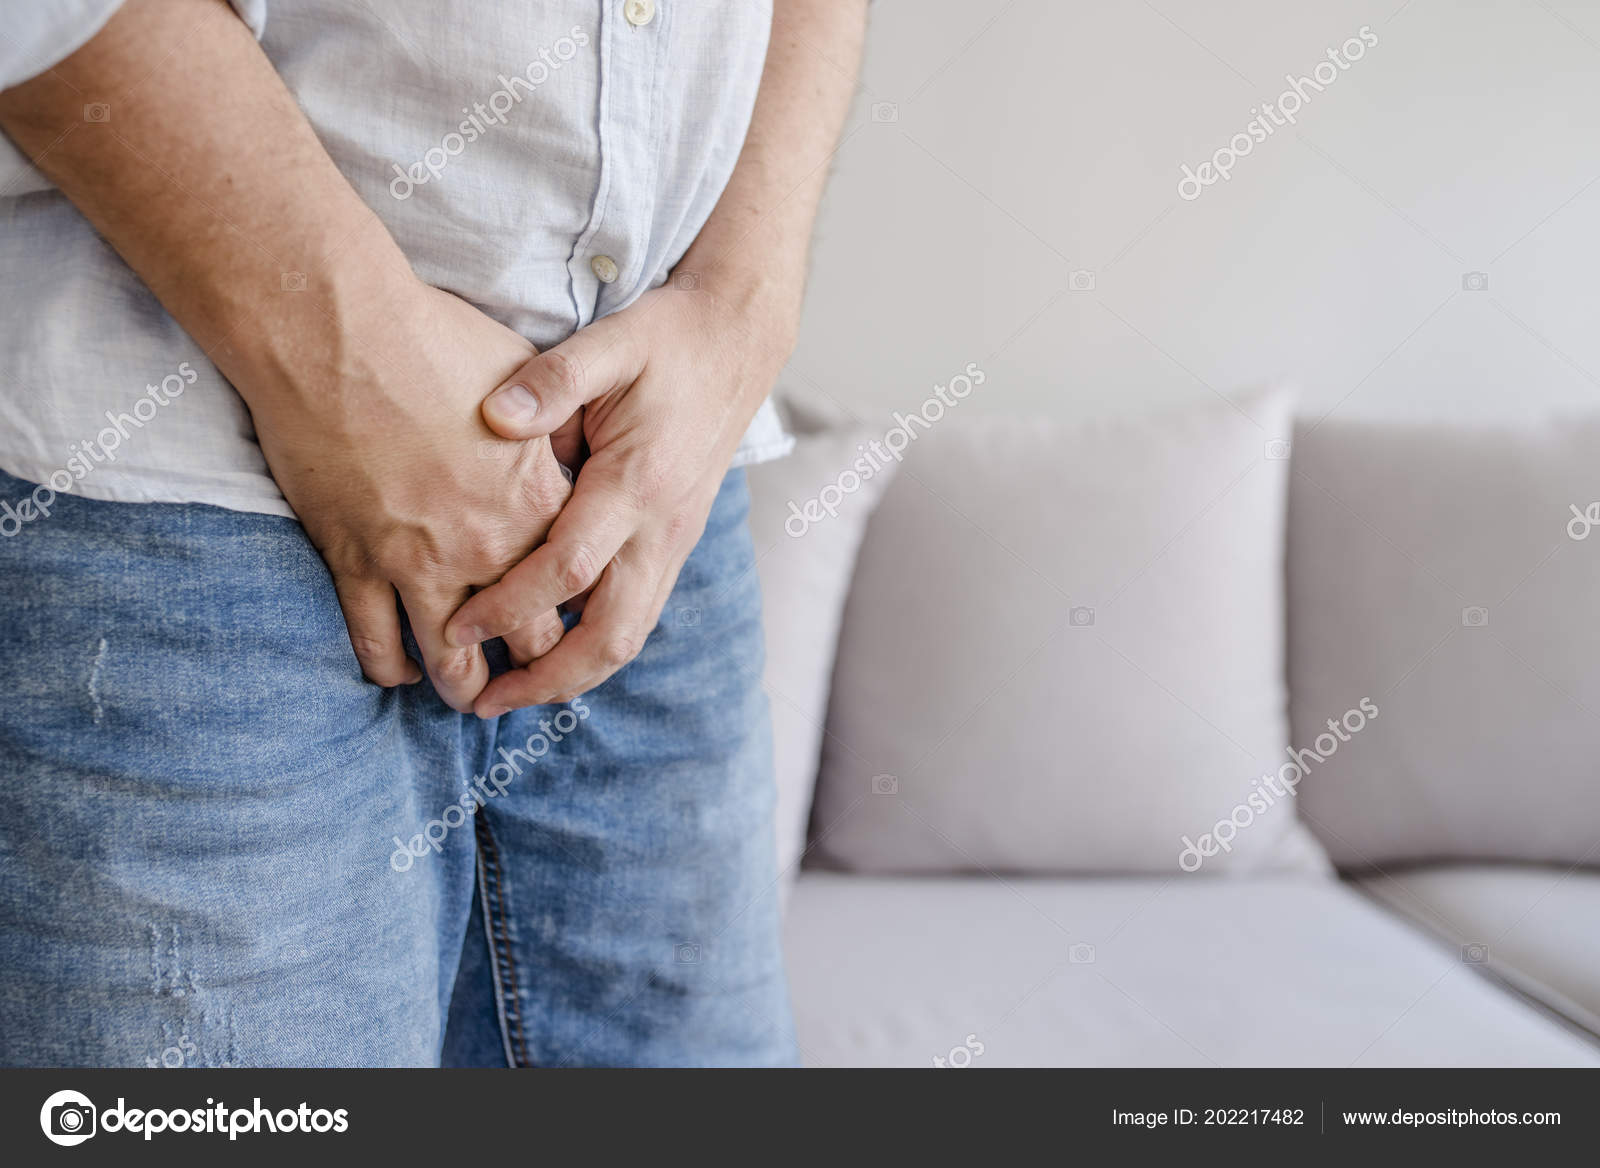 https://st4.depositphotos.com/9744818/20221/i/1600/depositphotos_202217482-stock-photo-man-hands-holding-his-crotch.jpg